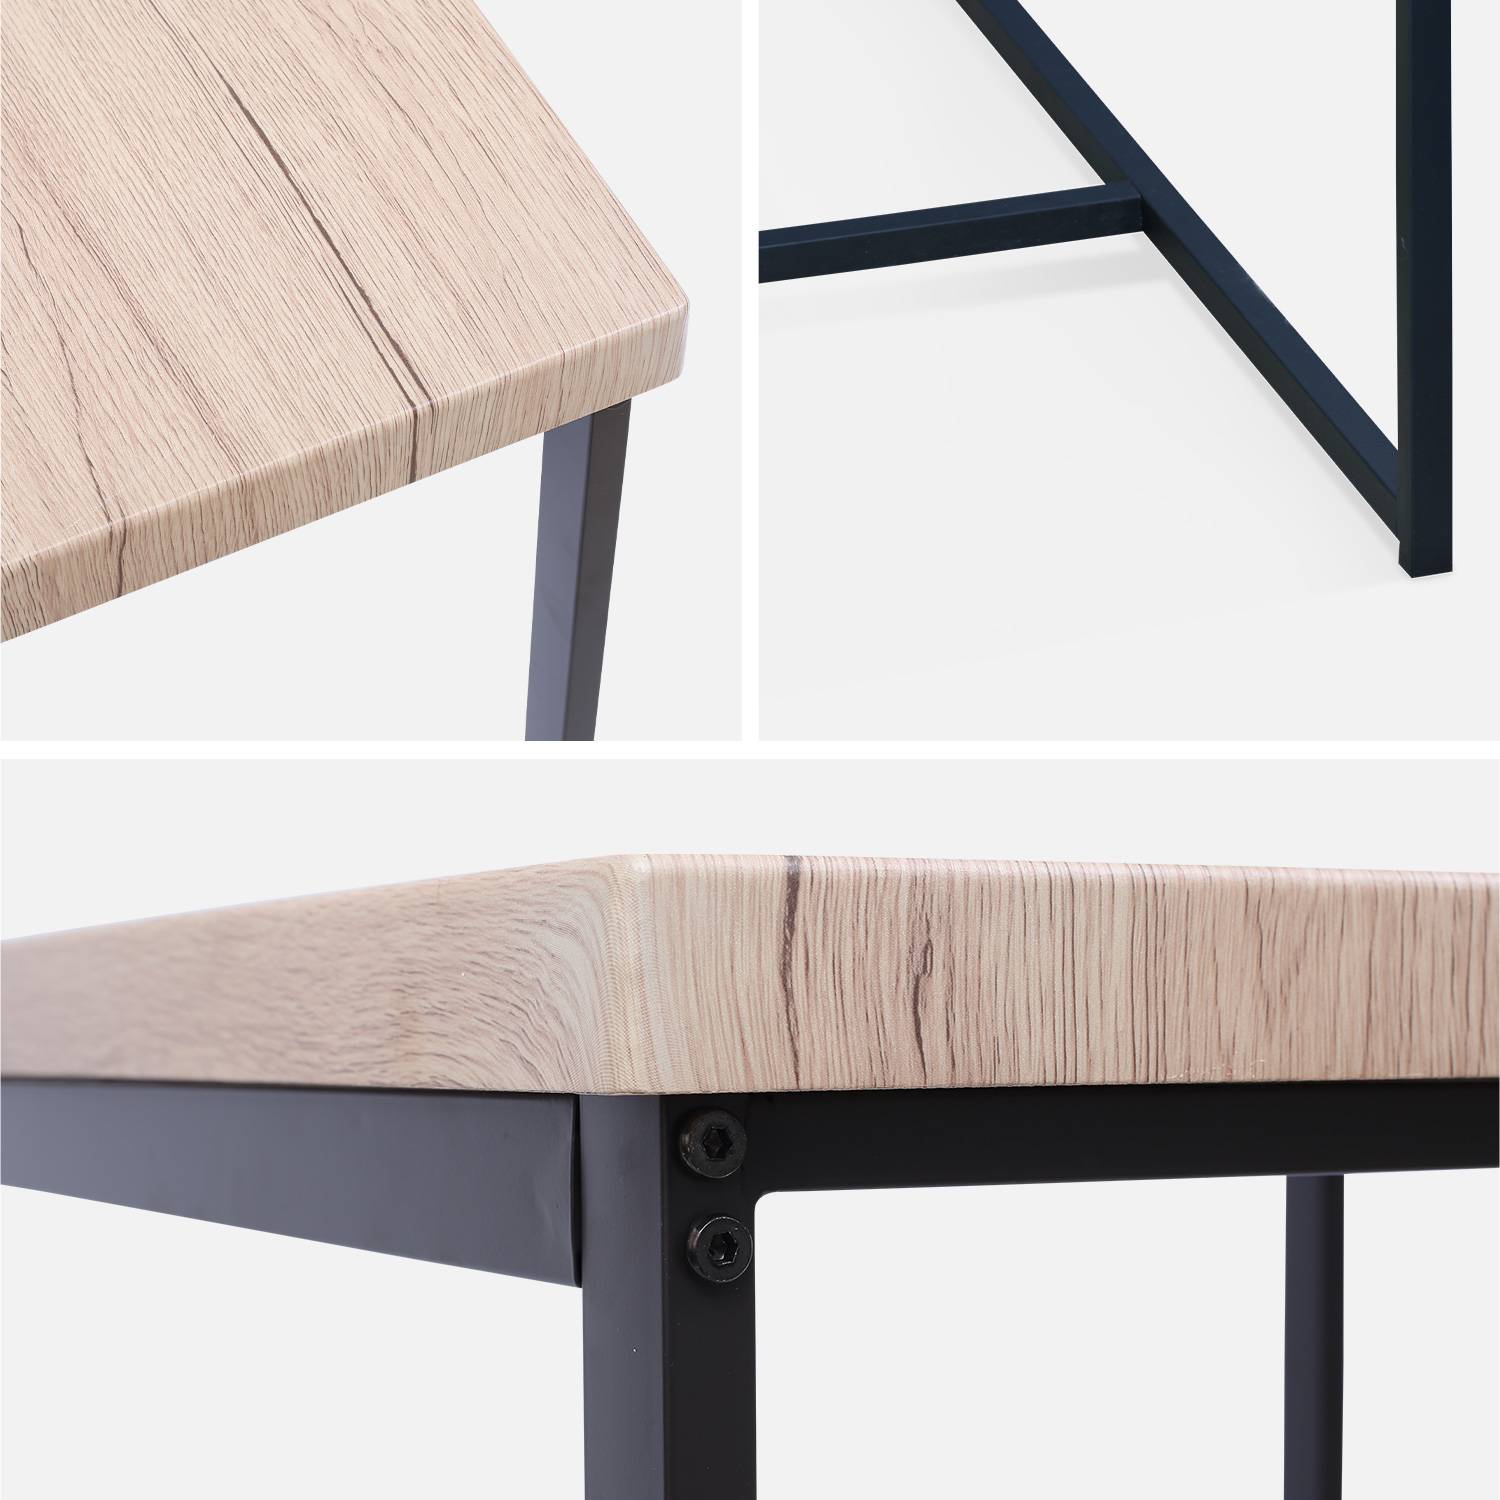 Industrial bar style table set with 2 stools, 60x60x88cm - Loft - Black,sweeek,Photo6